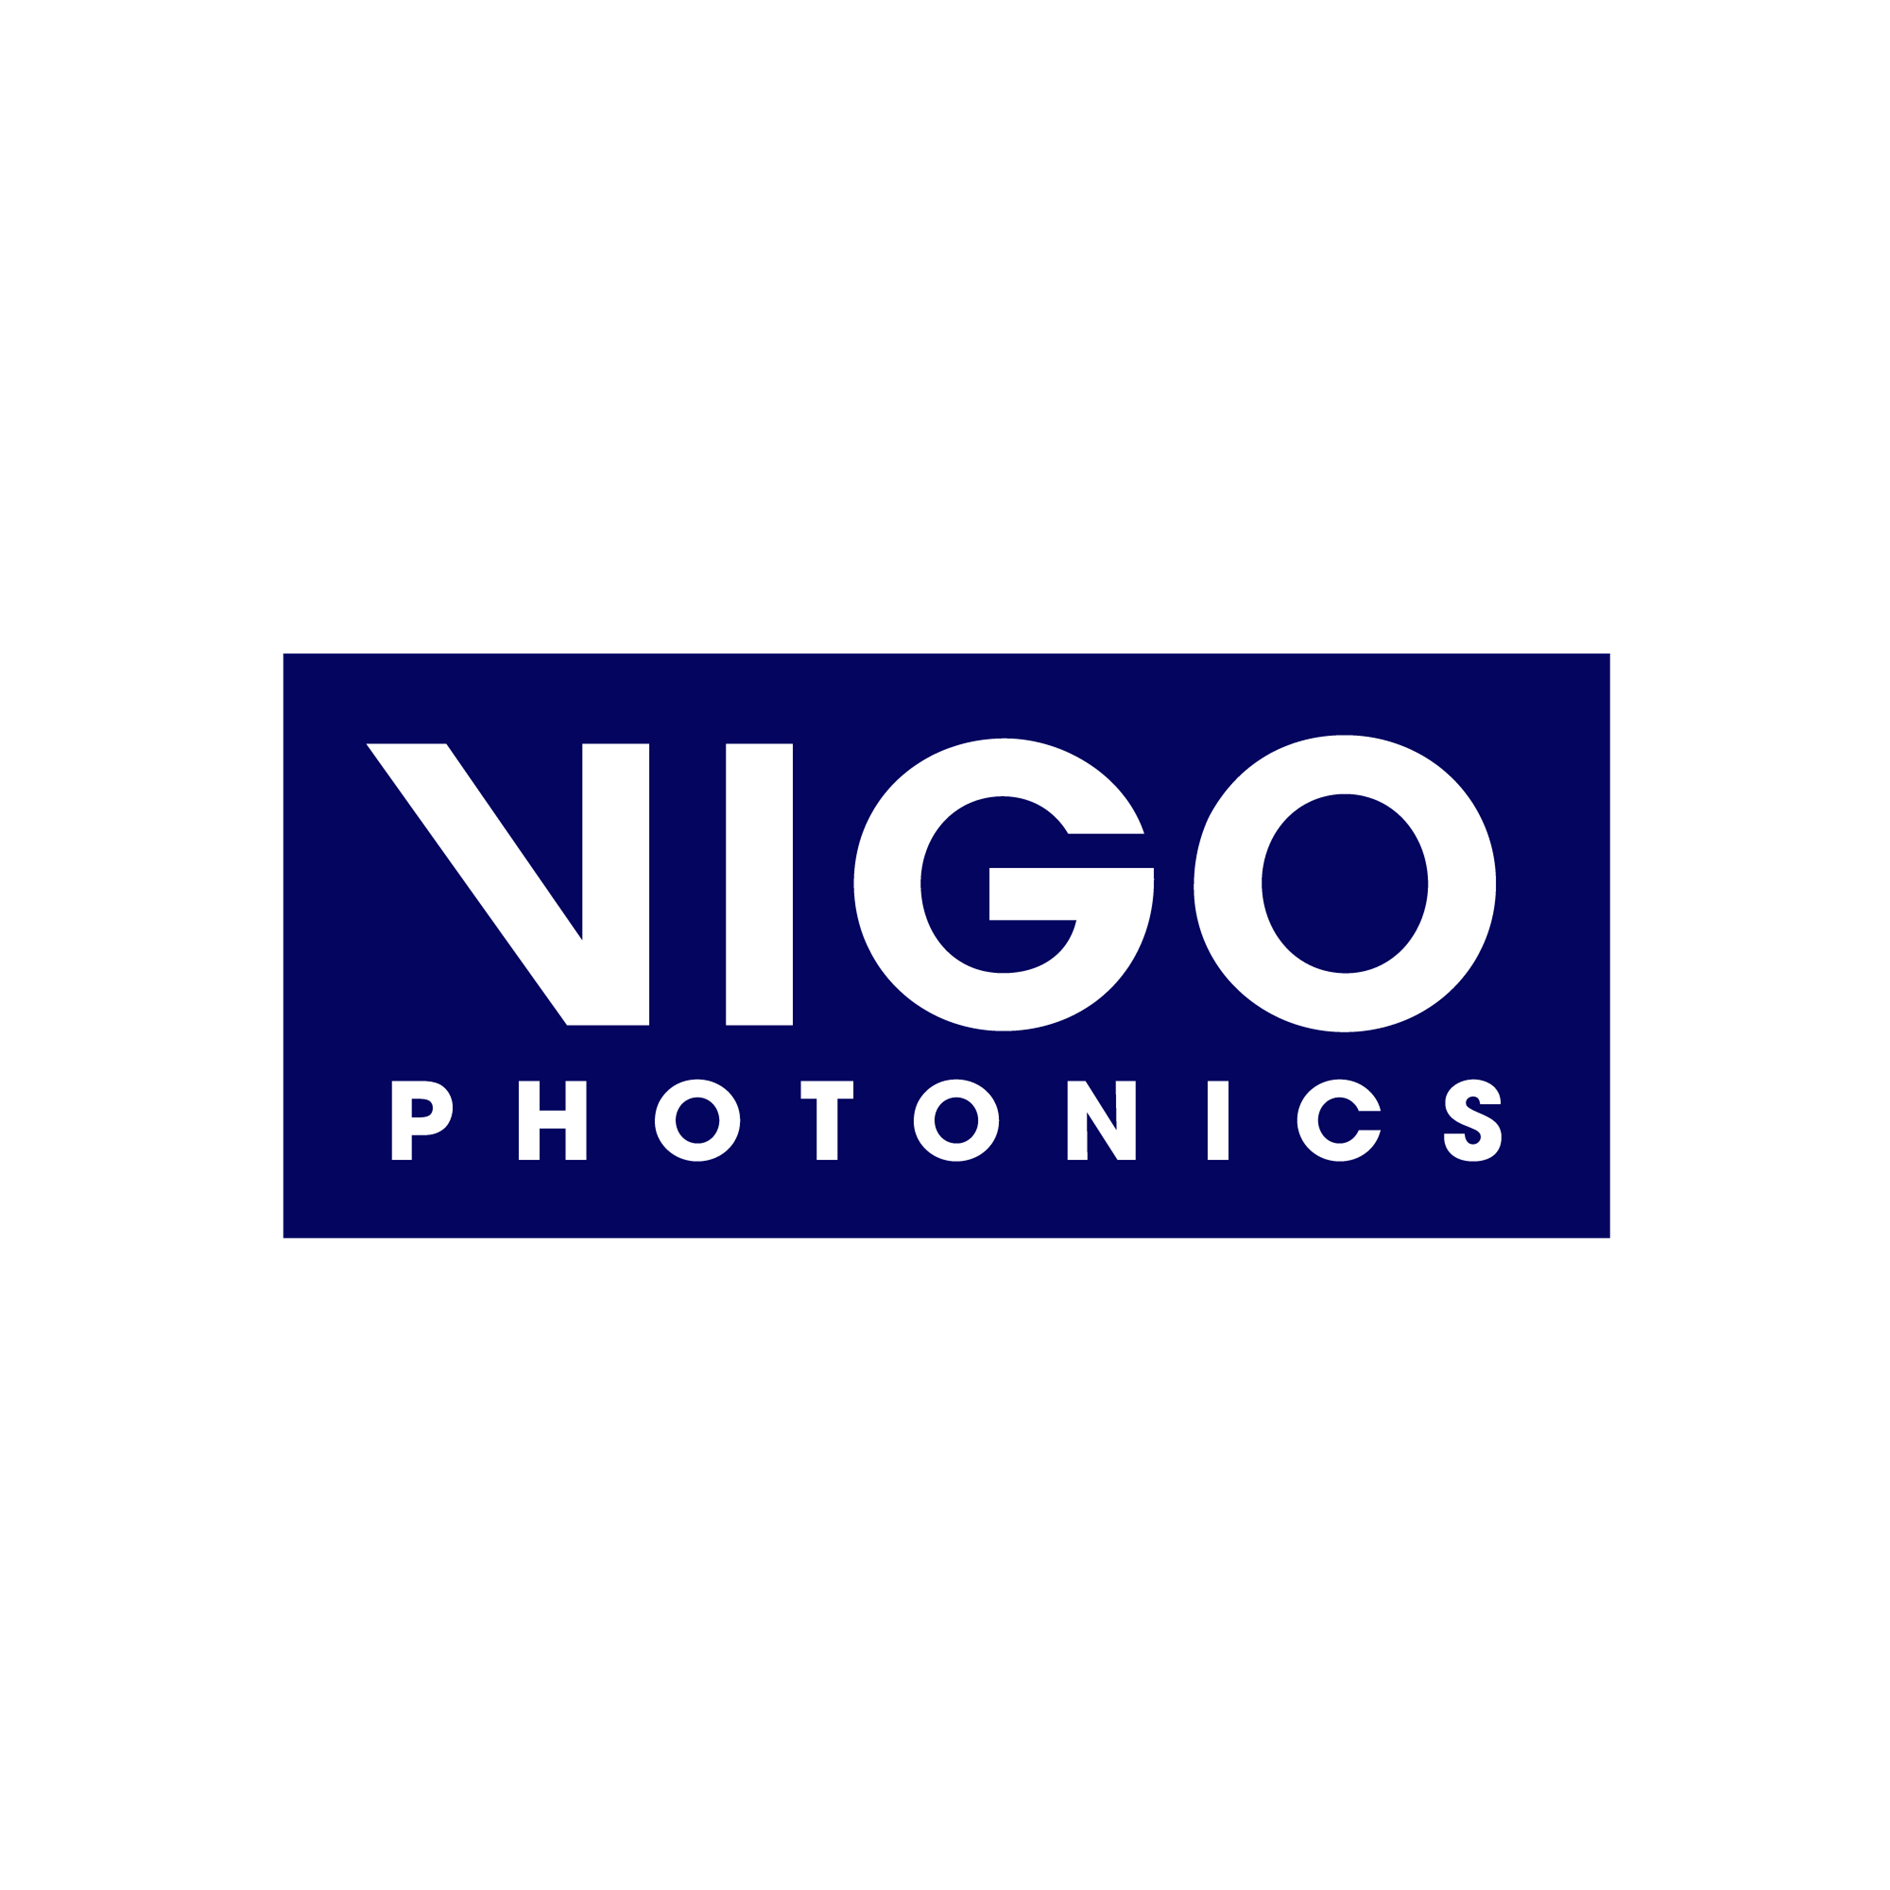 VIGO Photonics is a world-leading manufacturer of uncooled IR photodetectors.